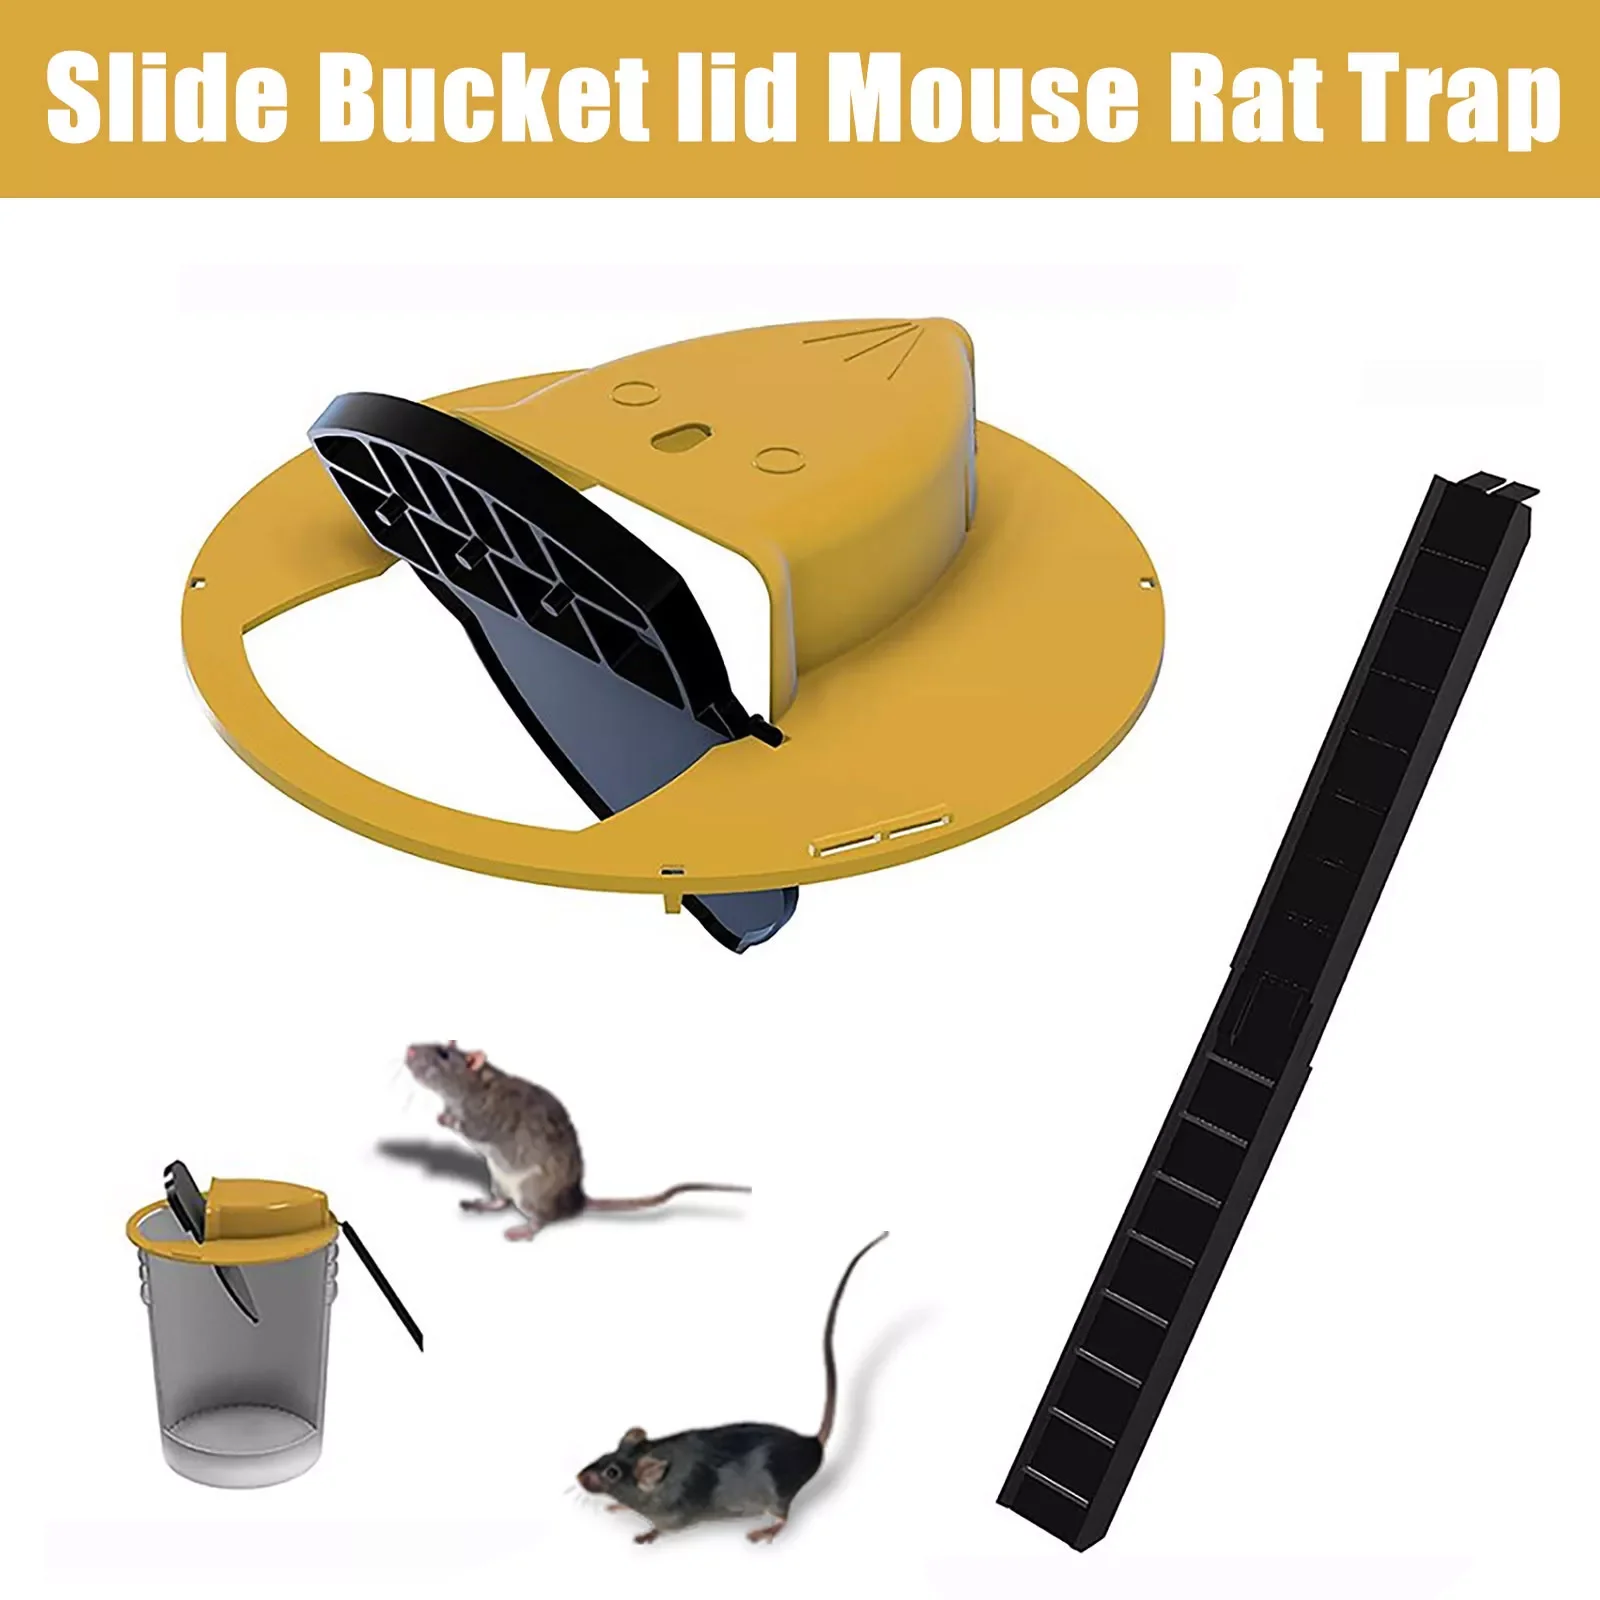 

Reusable Smart Mouse Rat Trap Plastic Flip N Slide Bucket Lid Mouse Rat Mouse Trap Humane Or Lethal Trap Door Style Multi Catch